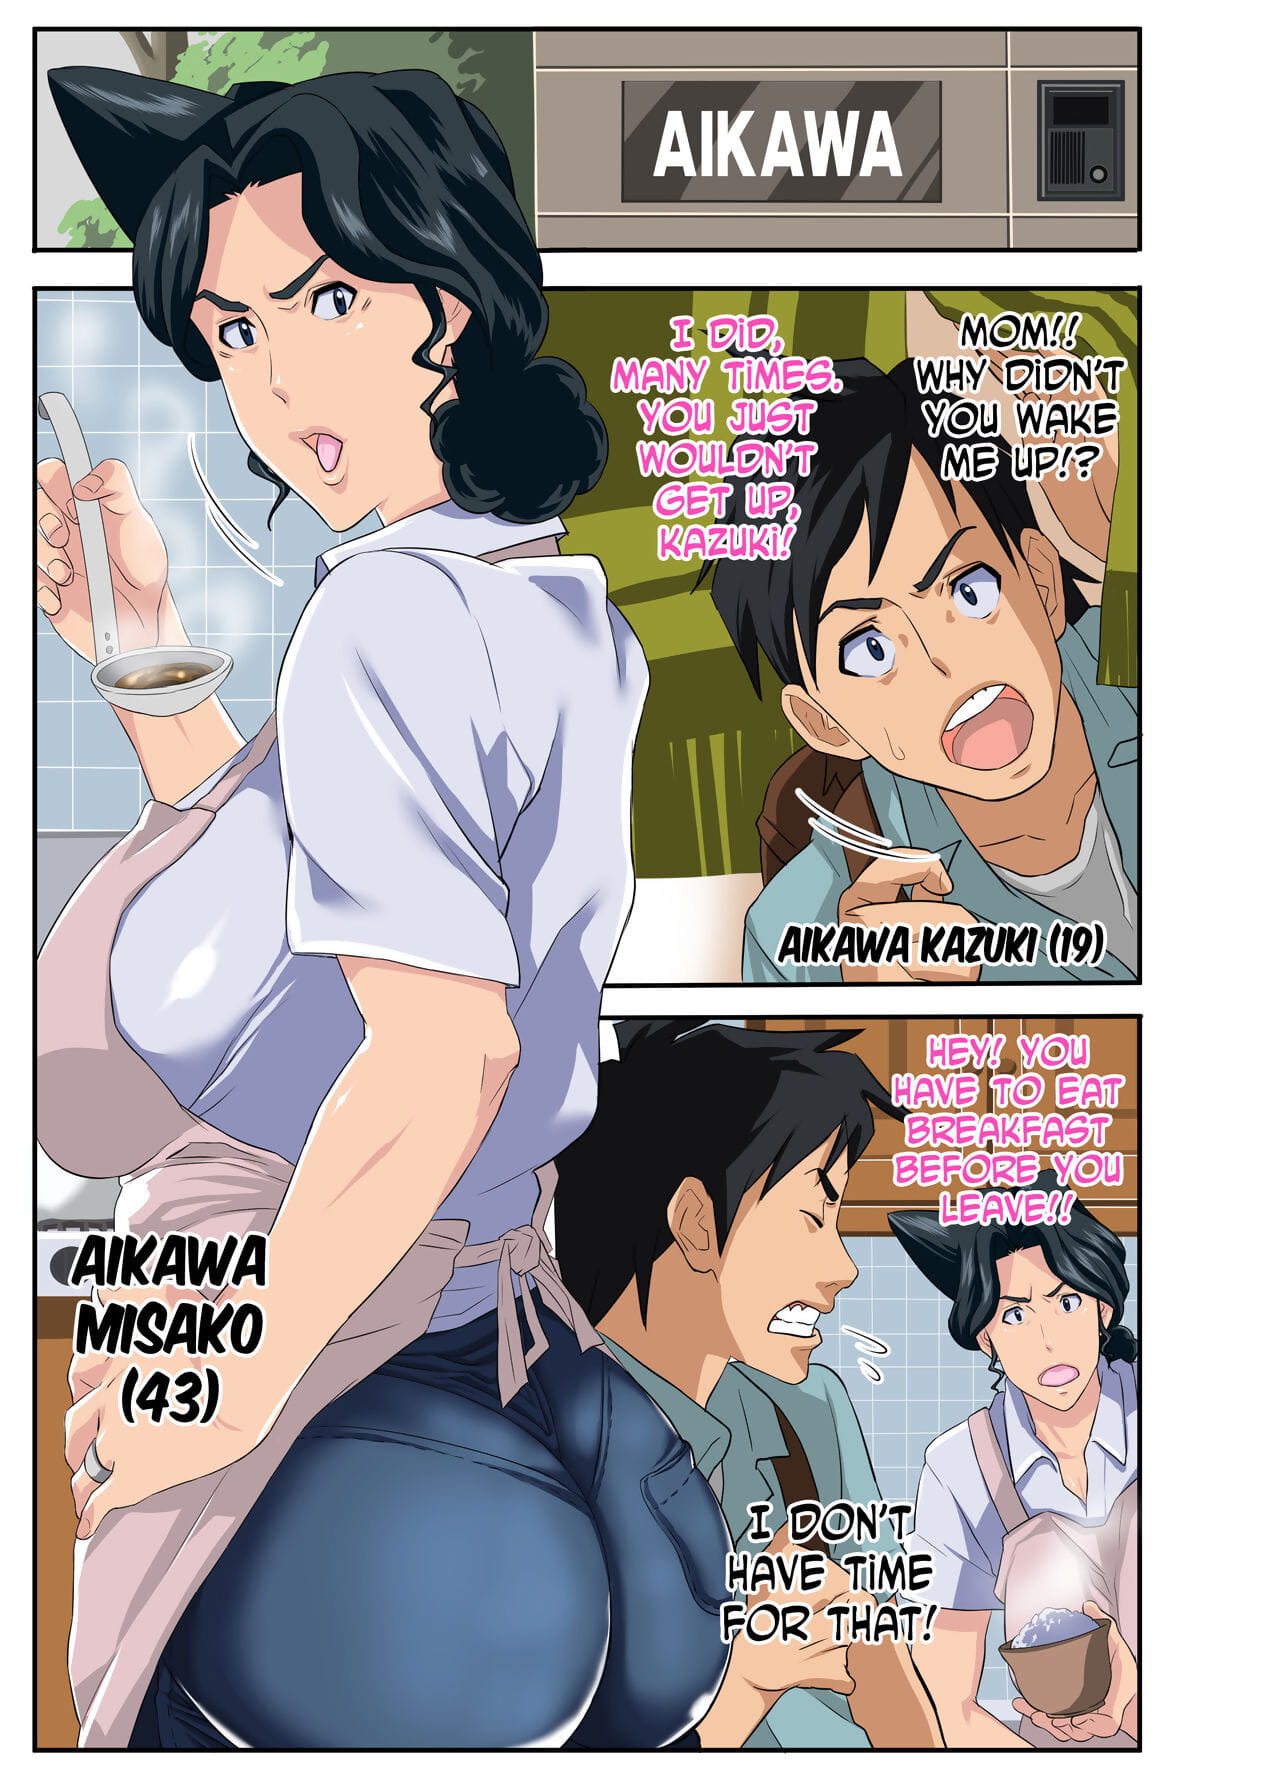 zoku Kimottama kaa chan para charao ~yaribeya hen~ continuation: Ousadia mom & playboy foda quarto capítulo page 1